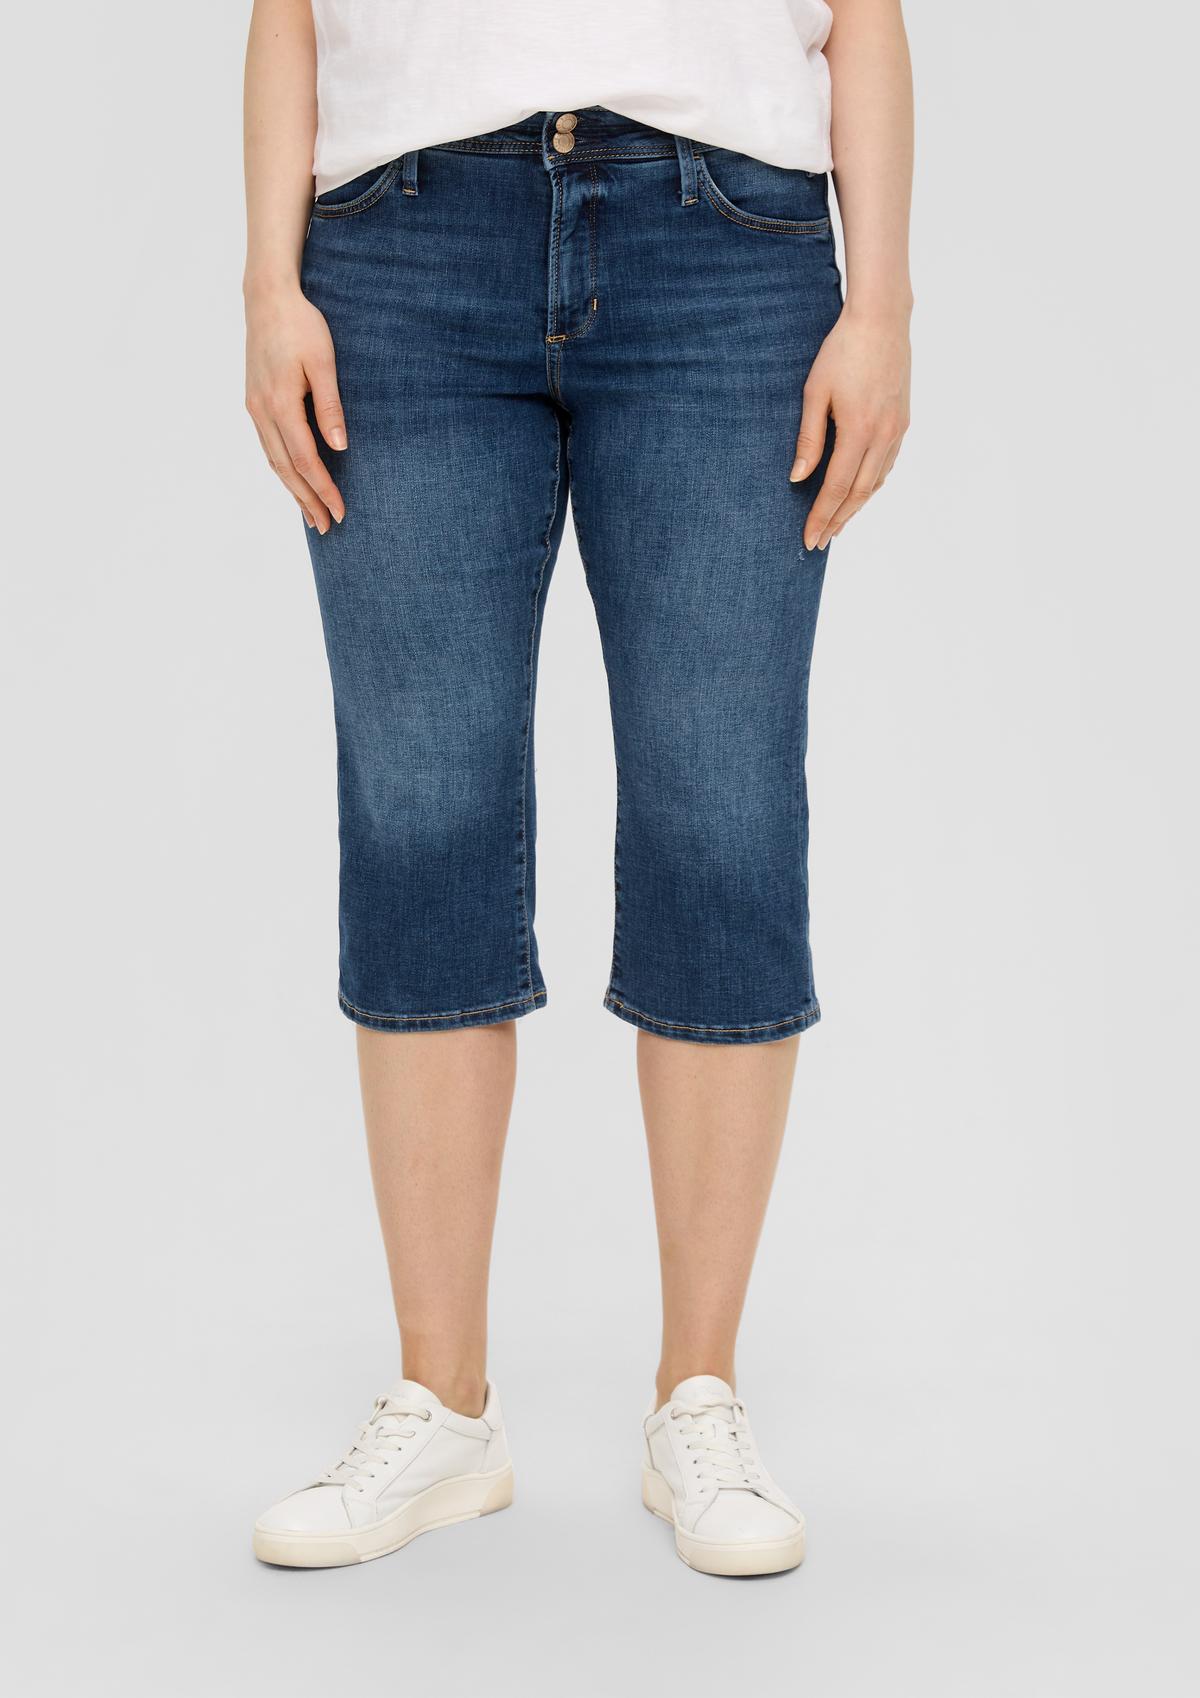 s.Oliver Jeans-Capri / Regular Fit / Mid Rise / Slim Leg